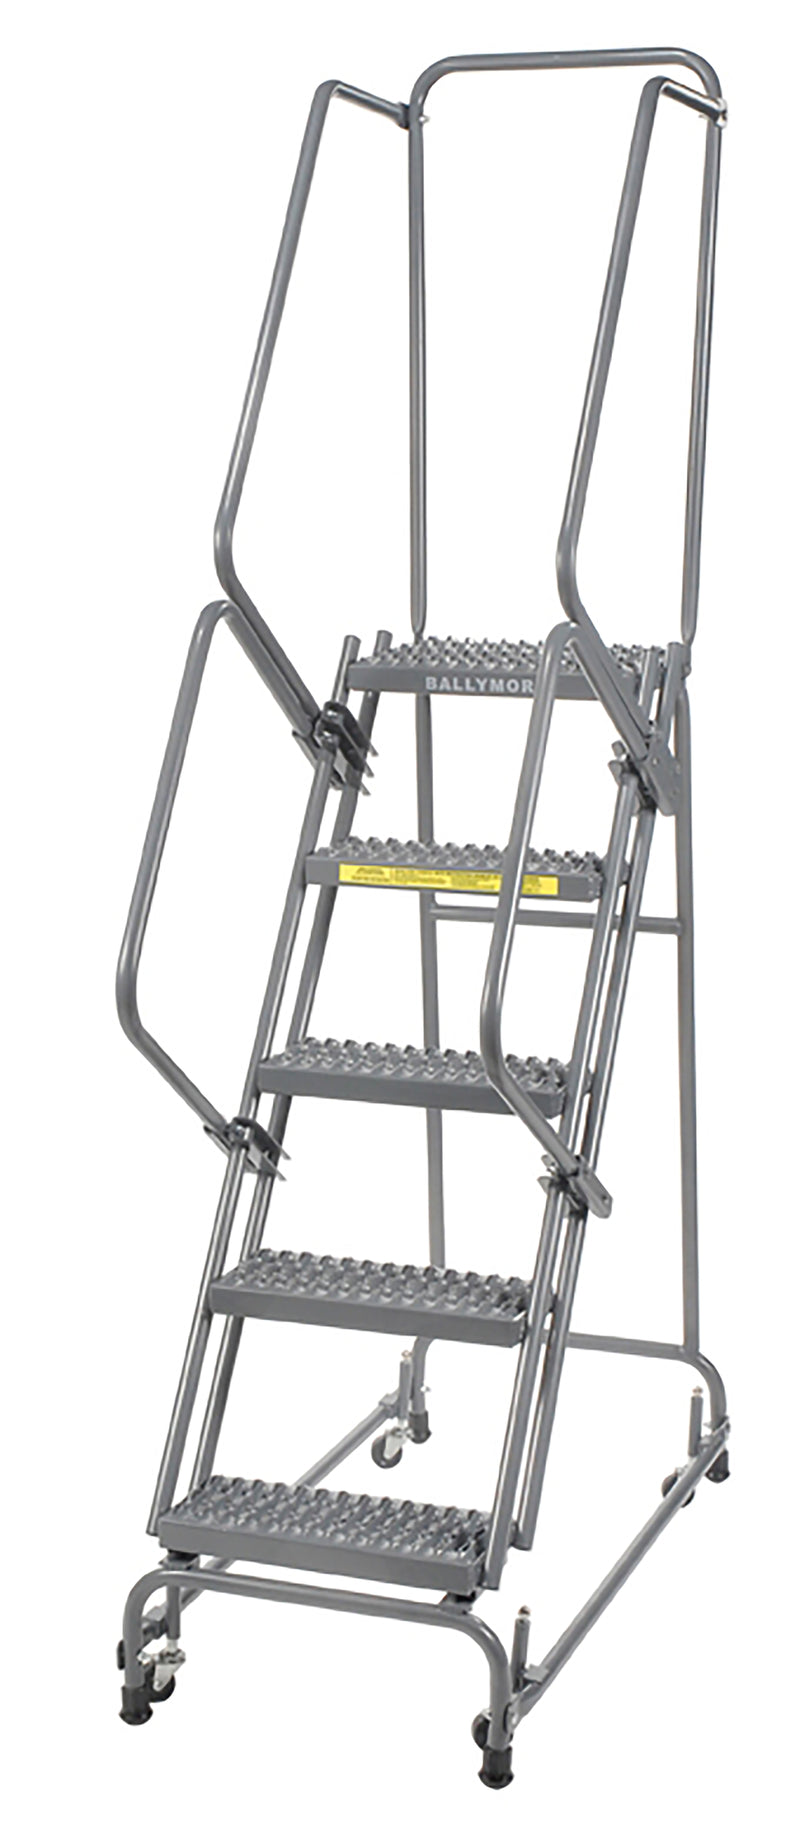 Spring Loaded Caster Ladder - 5 Step, Handrails - Ballymore